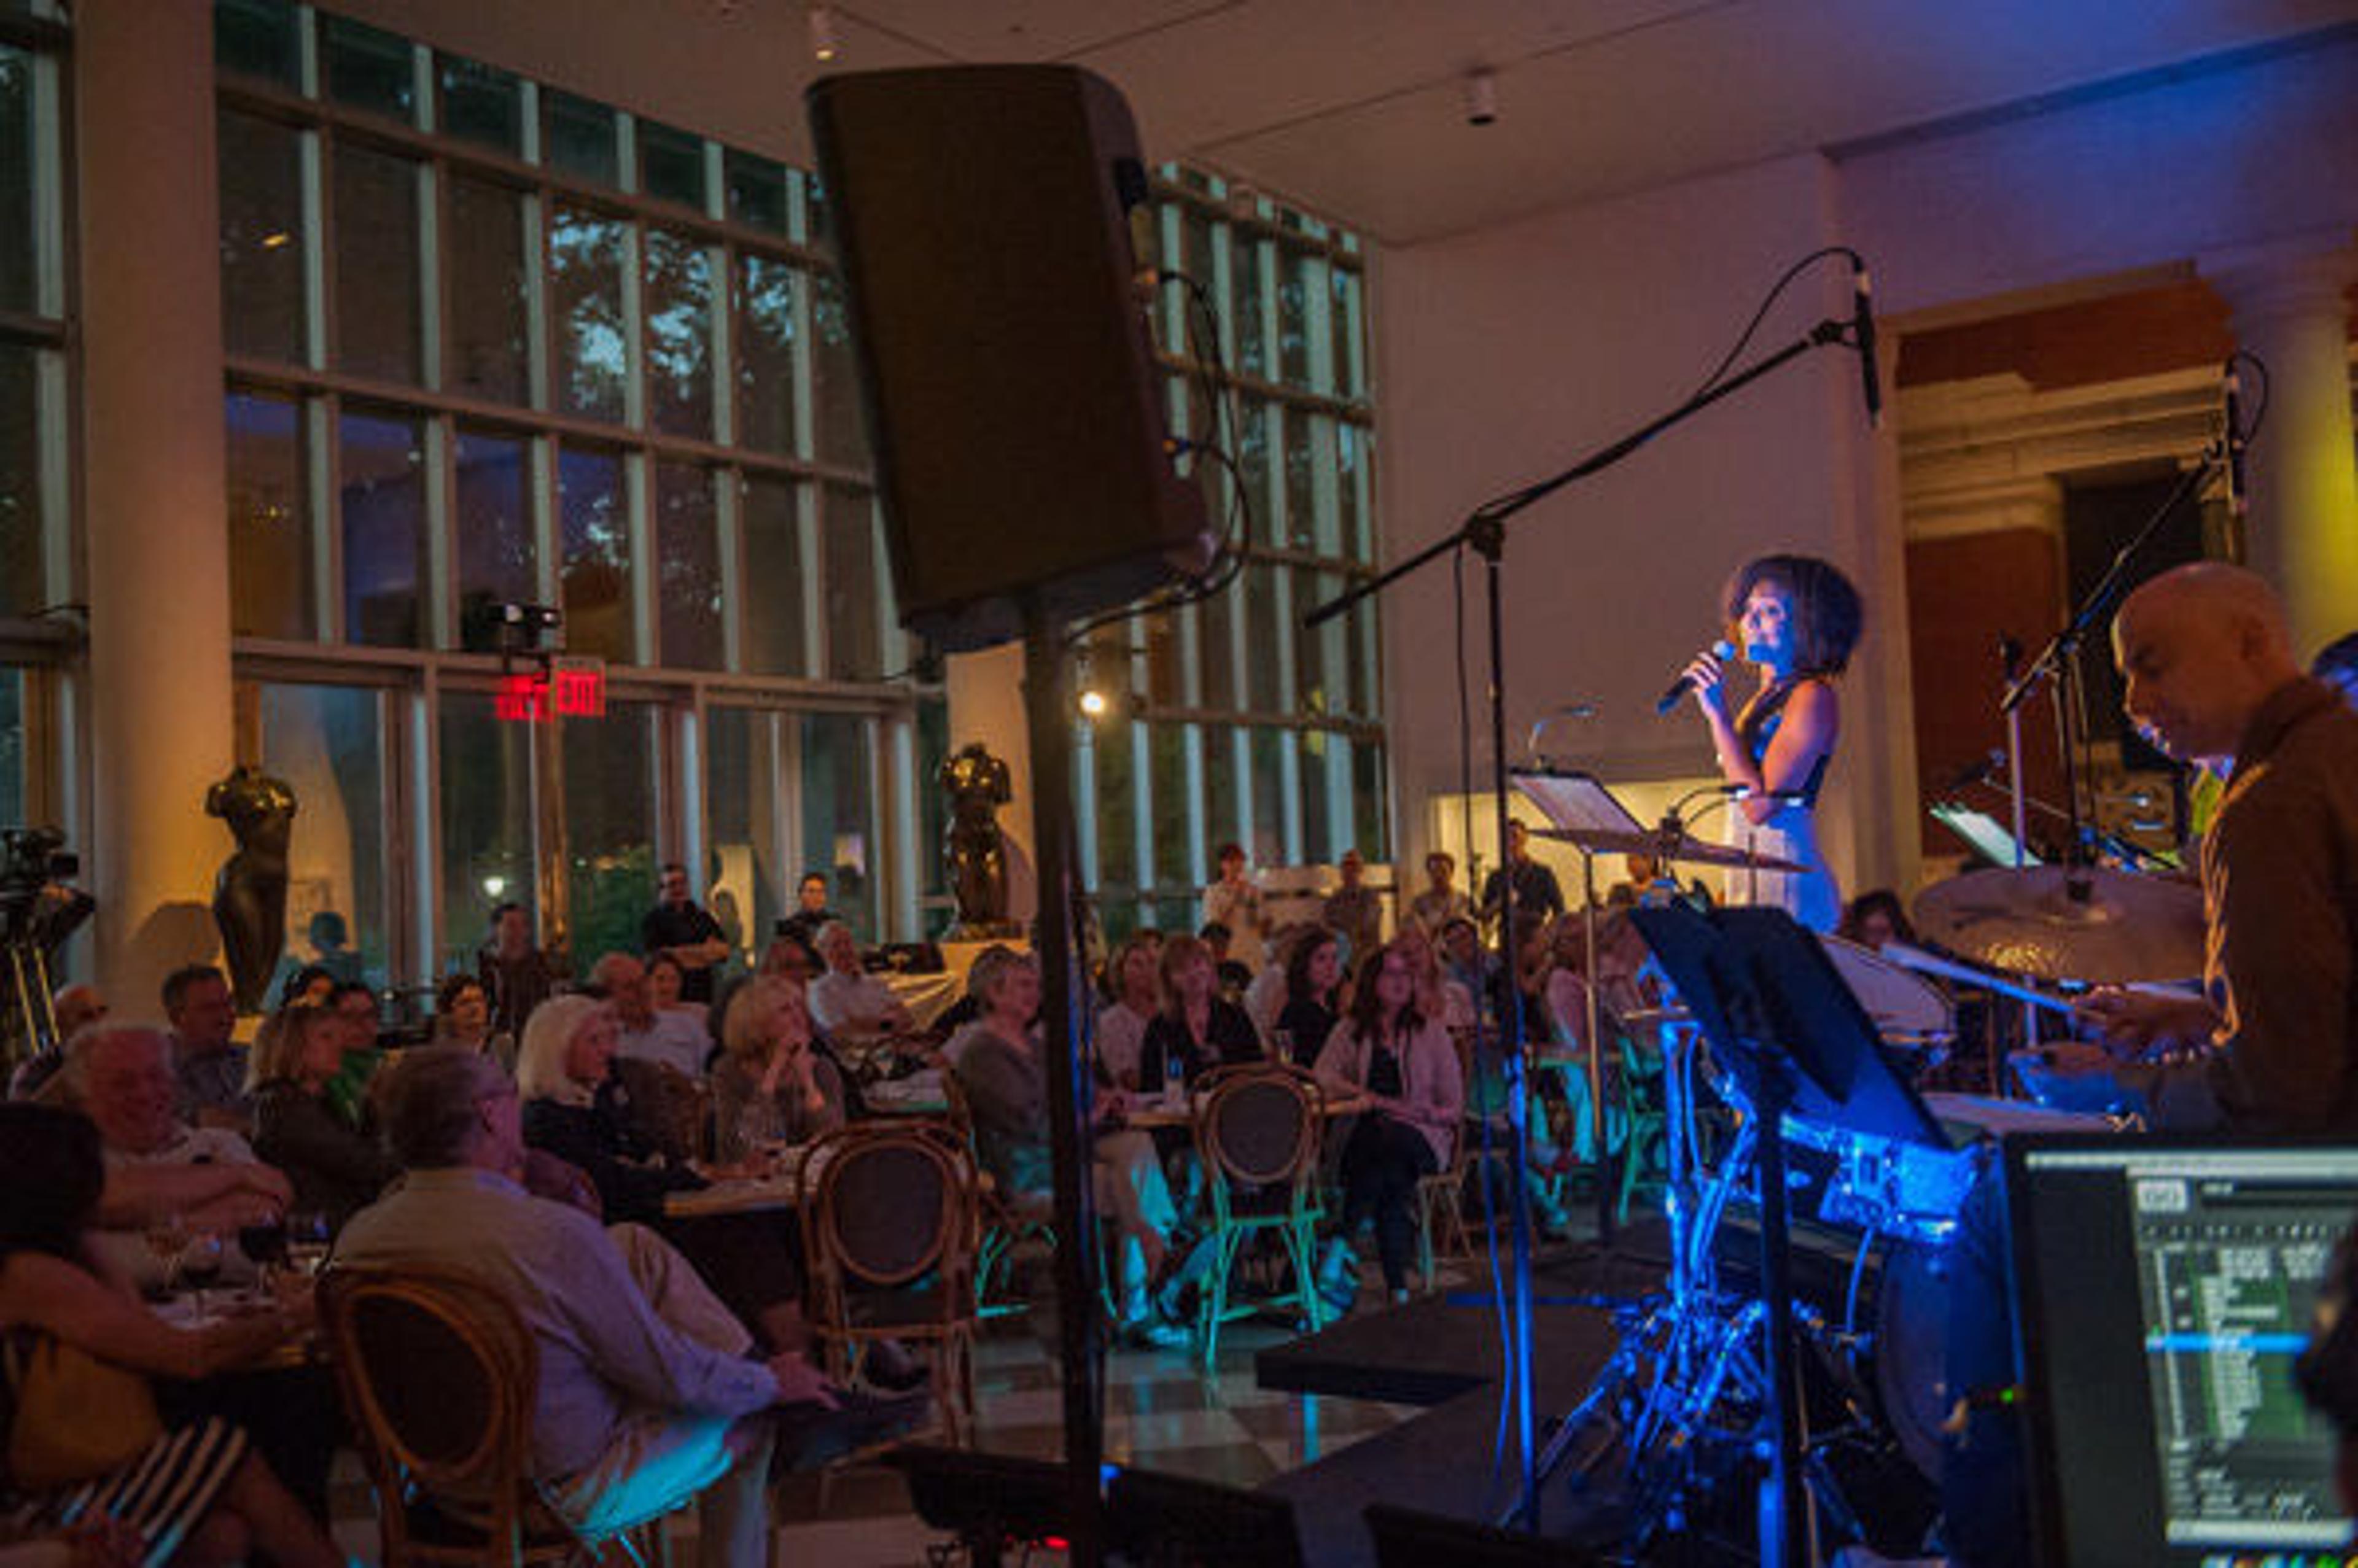 The Civilians perform Let Me Ascertain You in the Petrie Court Café, September 2014. © Stephanie Berger